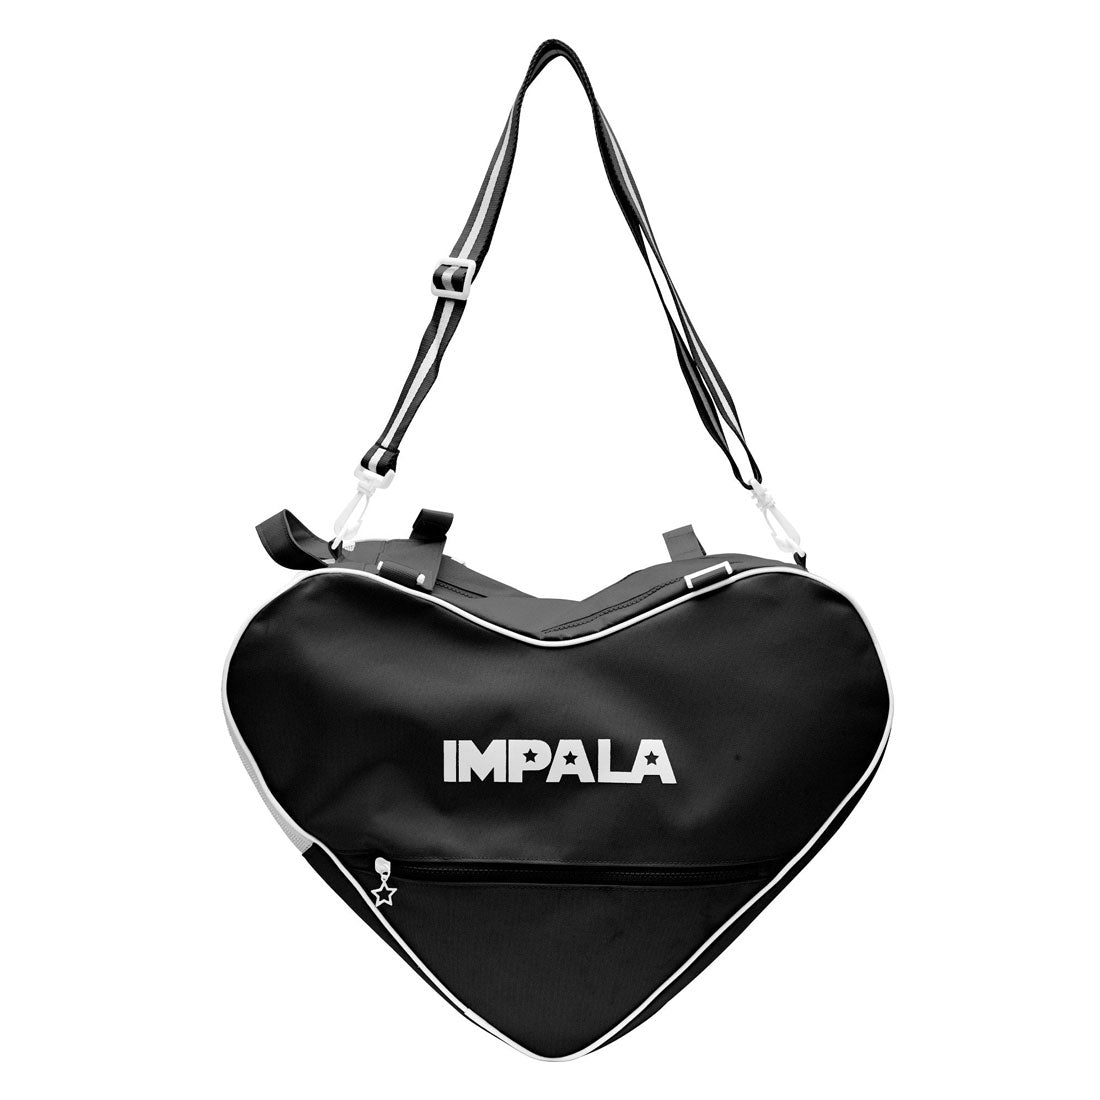 Impala Skate Bag - Black Bags and Backpacks